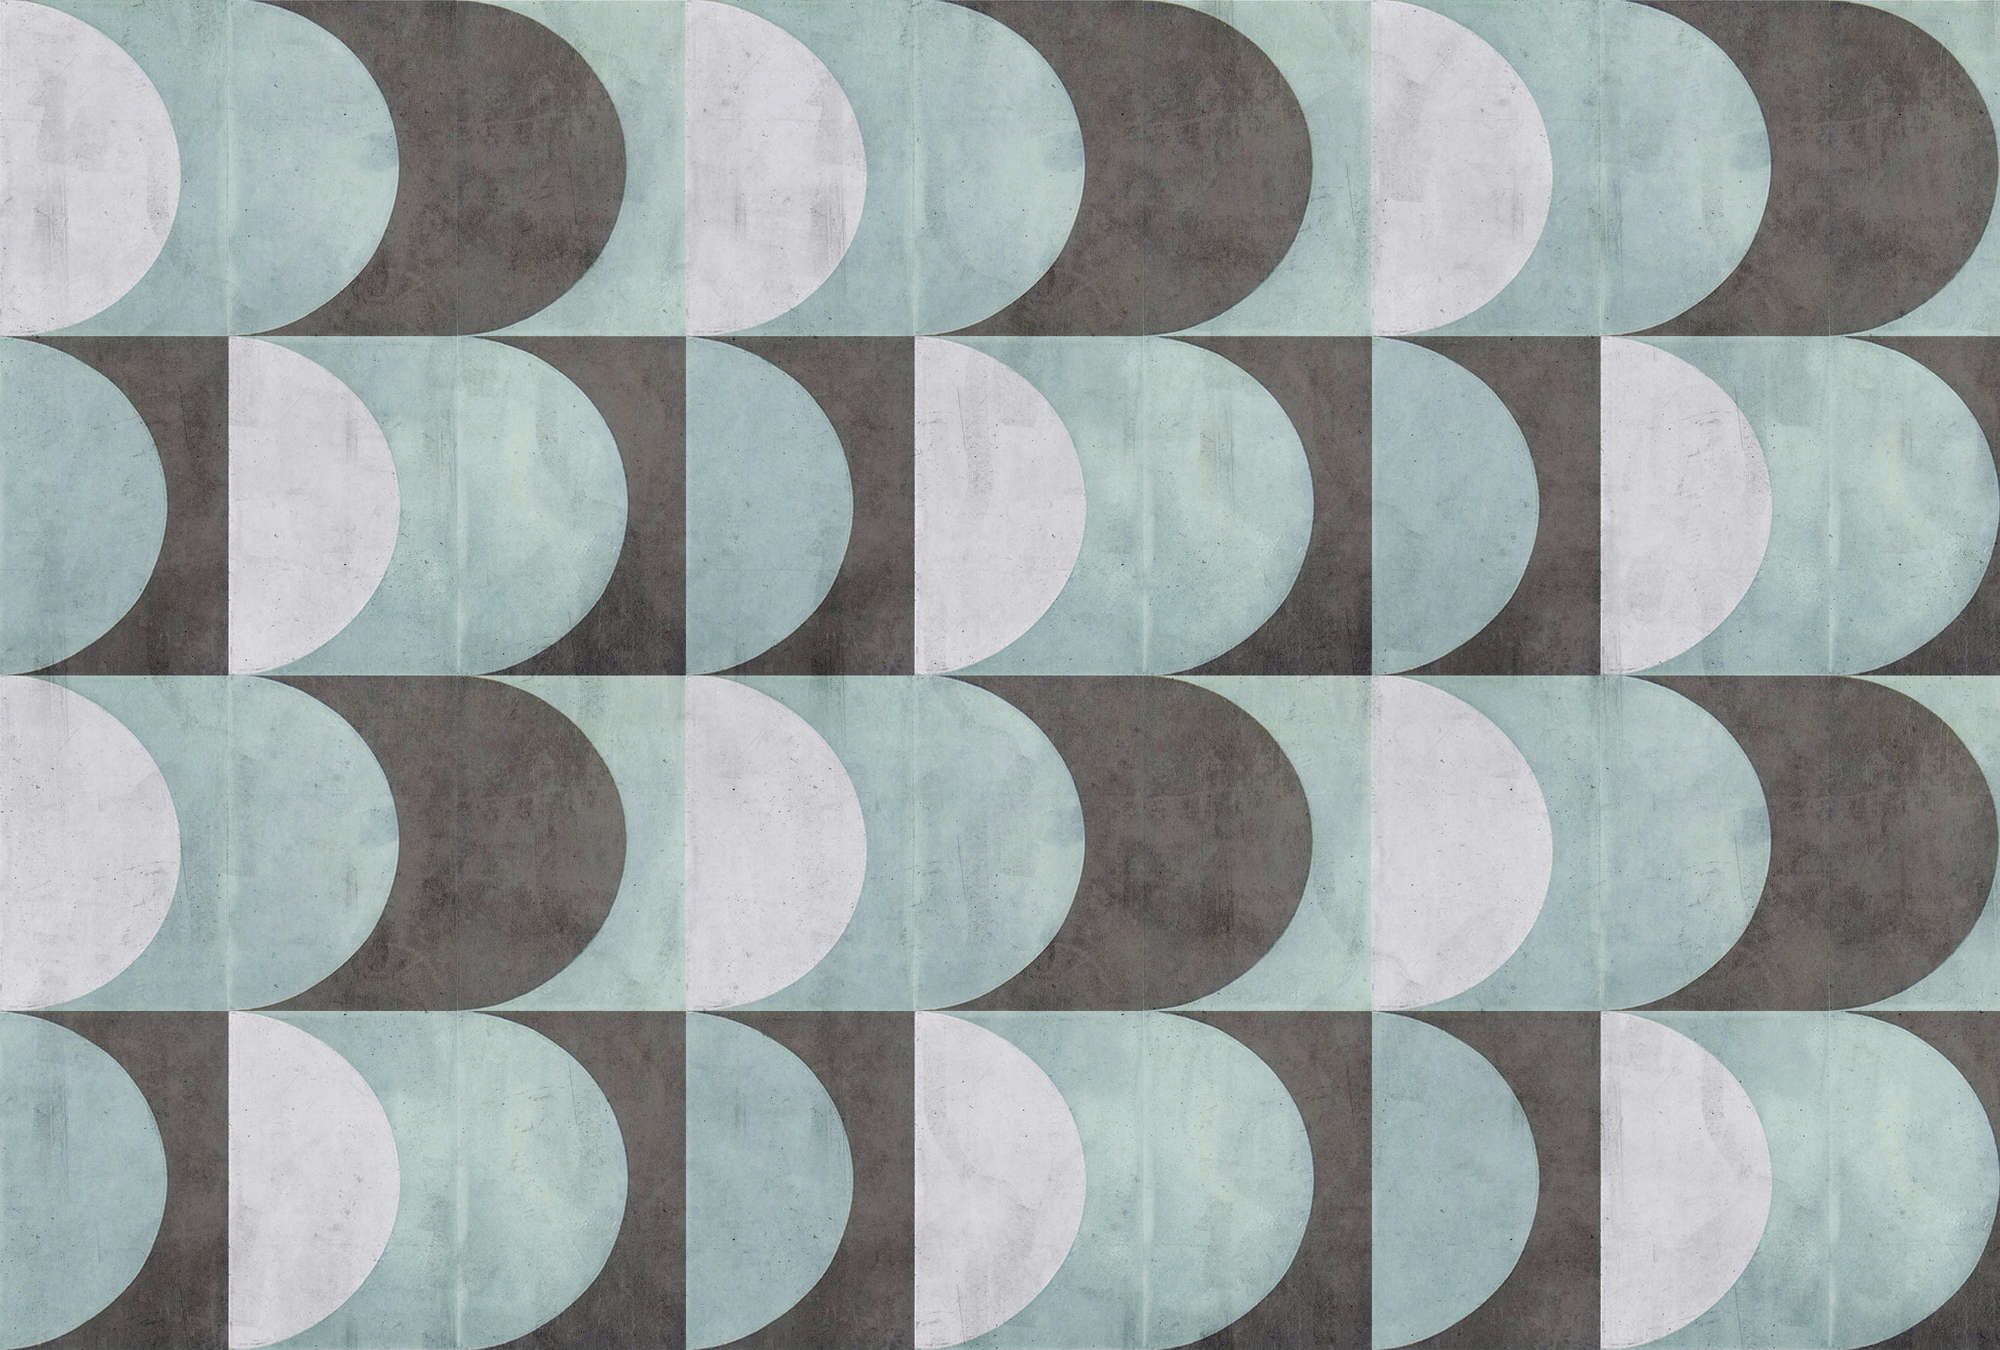             Photo wallpaper »julek 2« - retro pattern in concrete look - mint green, grey | lightly textured non-woven
        